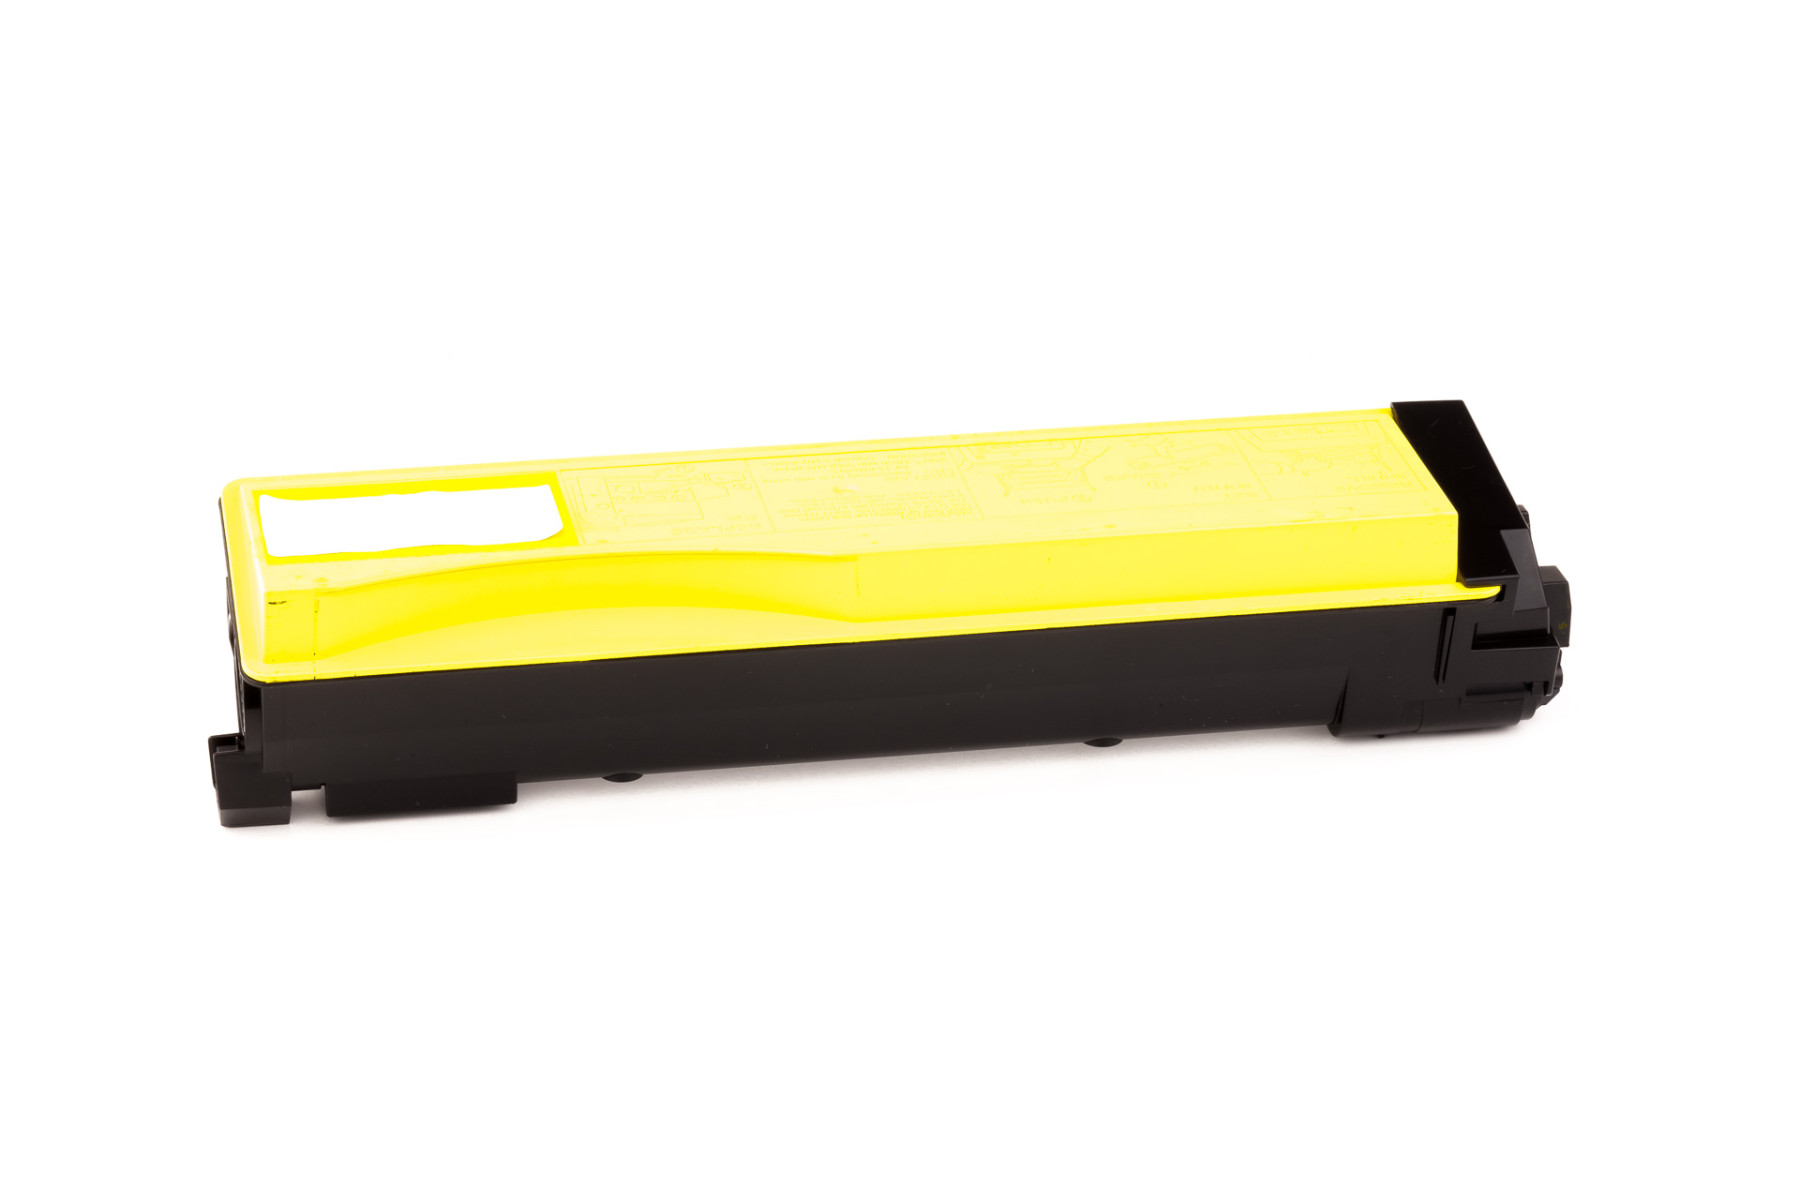 Set consisting of Toner cartridge (alternative) compatible with Kyocera/Mita FS-C 5100 DN  //  TK540K / TK 540K black, TK540C / TK 540C cyan, TK540M / TK 540M magenta, TK540Y / TK 540Y yellow - Save 6%